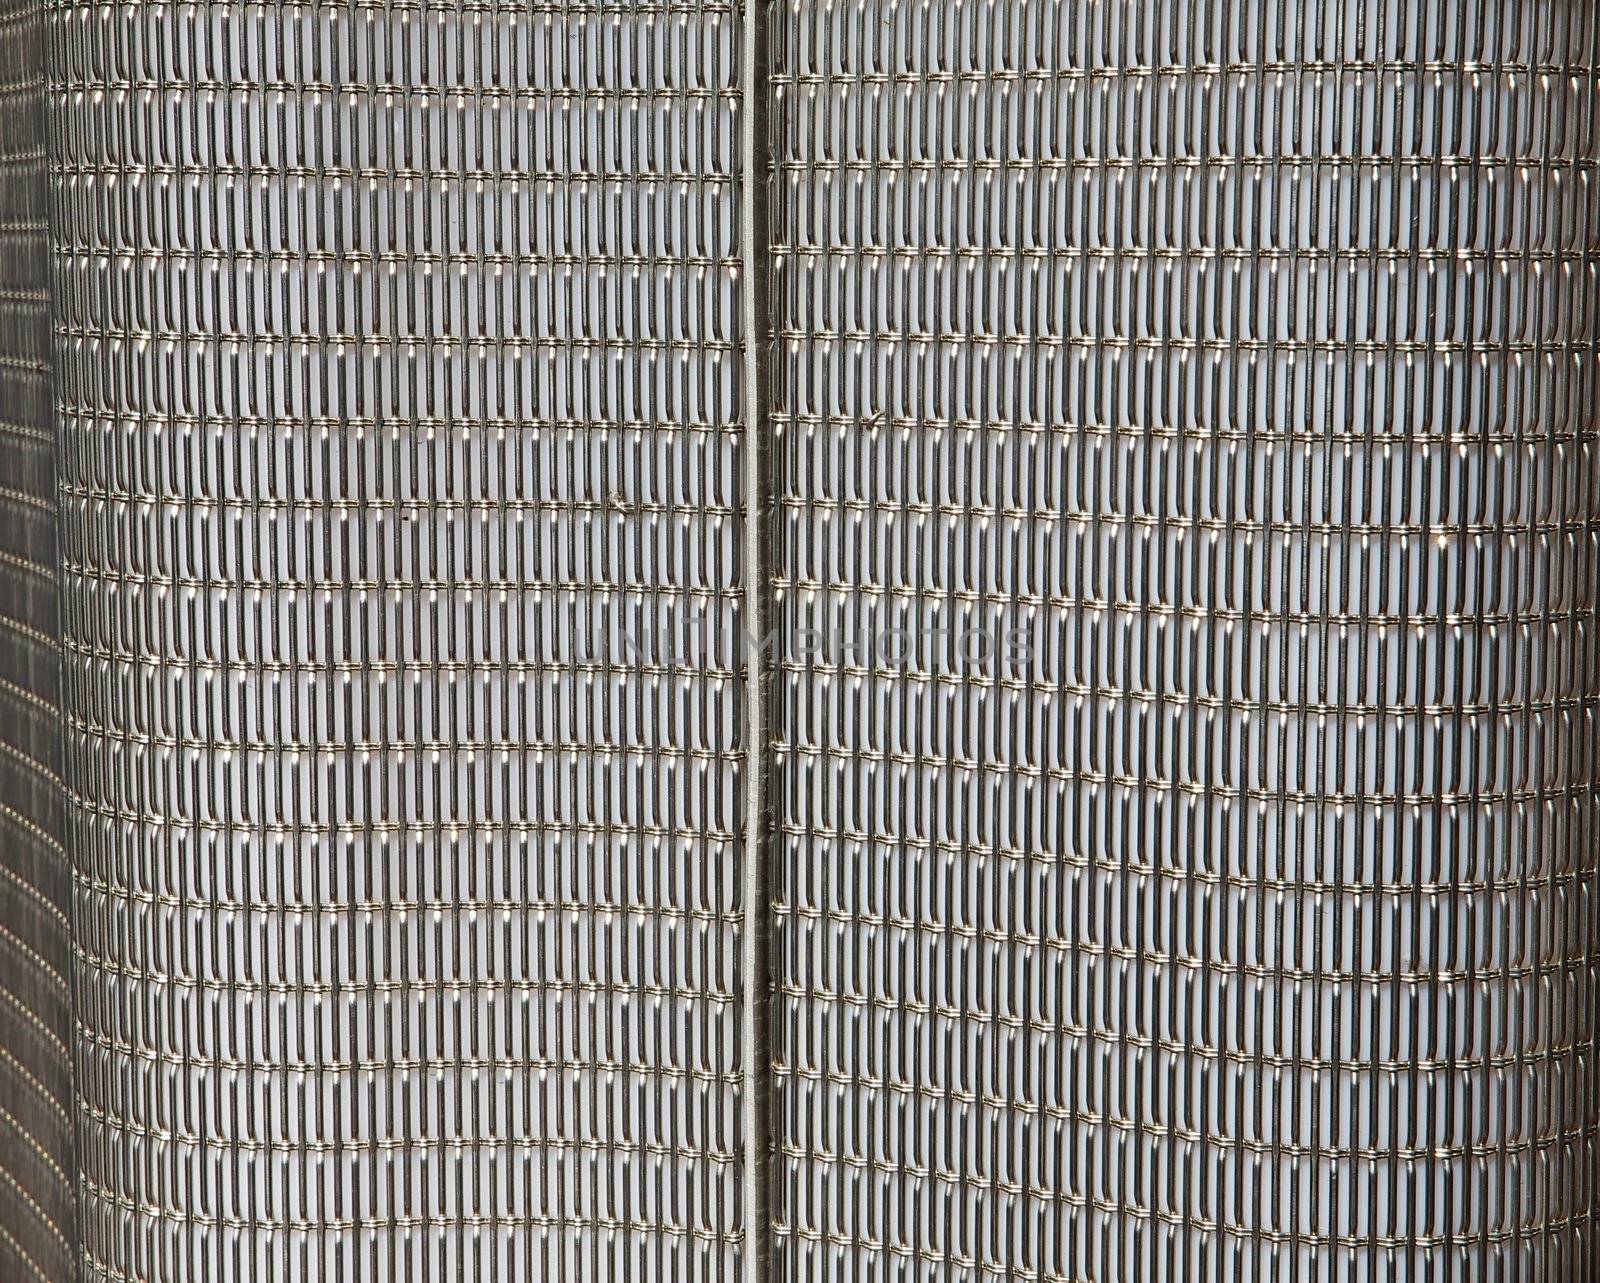 Abstract metal grid wall by bobkeenan